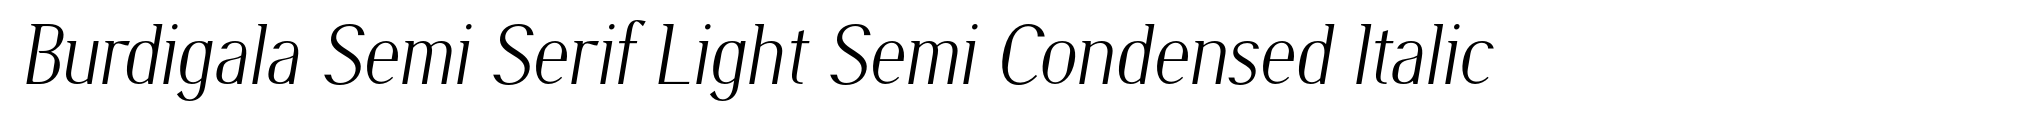 Burdigala Semi Serif Light Semi Condensed Italic image